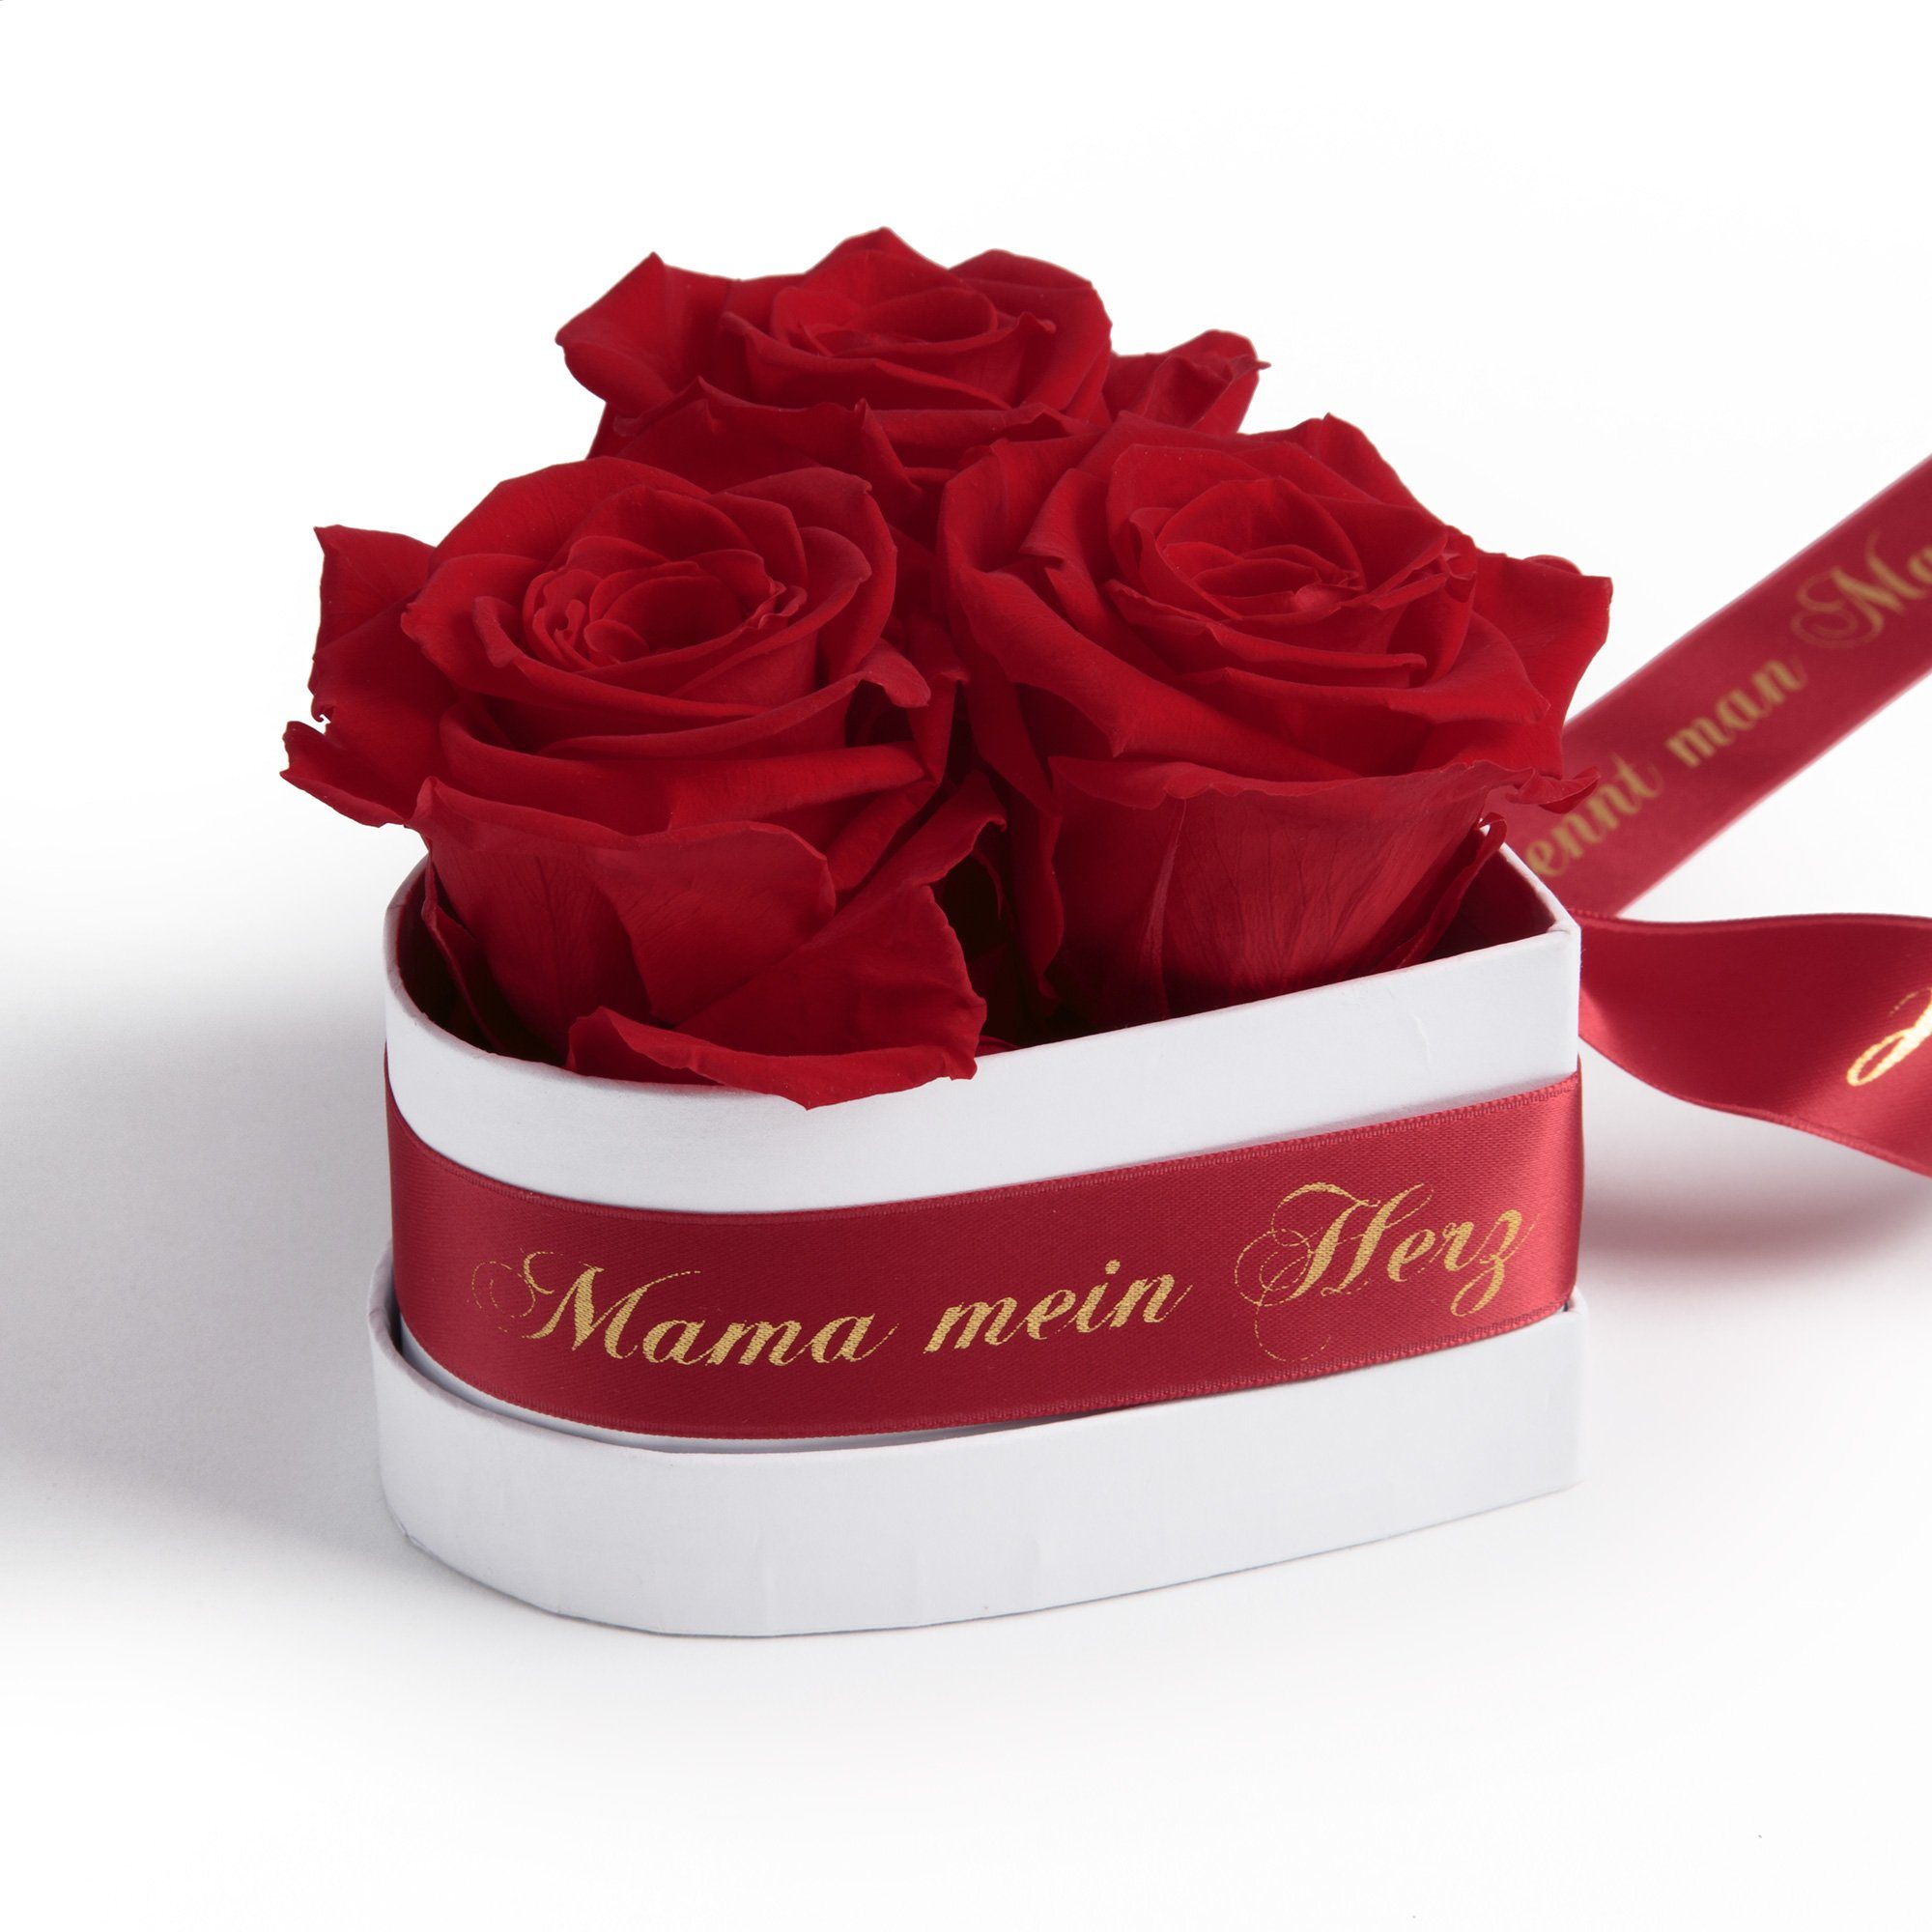 Höhe Kunstblume Engel Mama Herz konserviert Echte Rot ohne haltbar ROSEMARIE Flügel Rosenbox cm, 10 Rosen lange Rose, nennt Rosen 3 man Heidelberg, SCHULZ